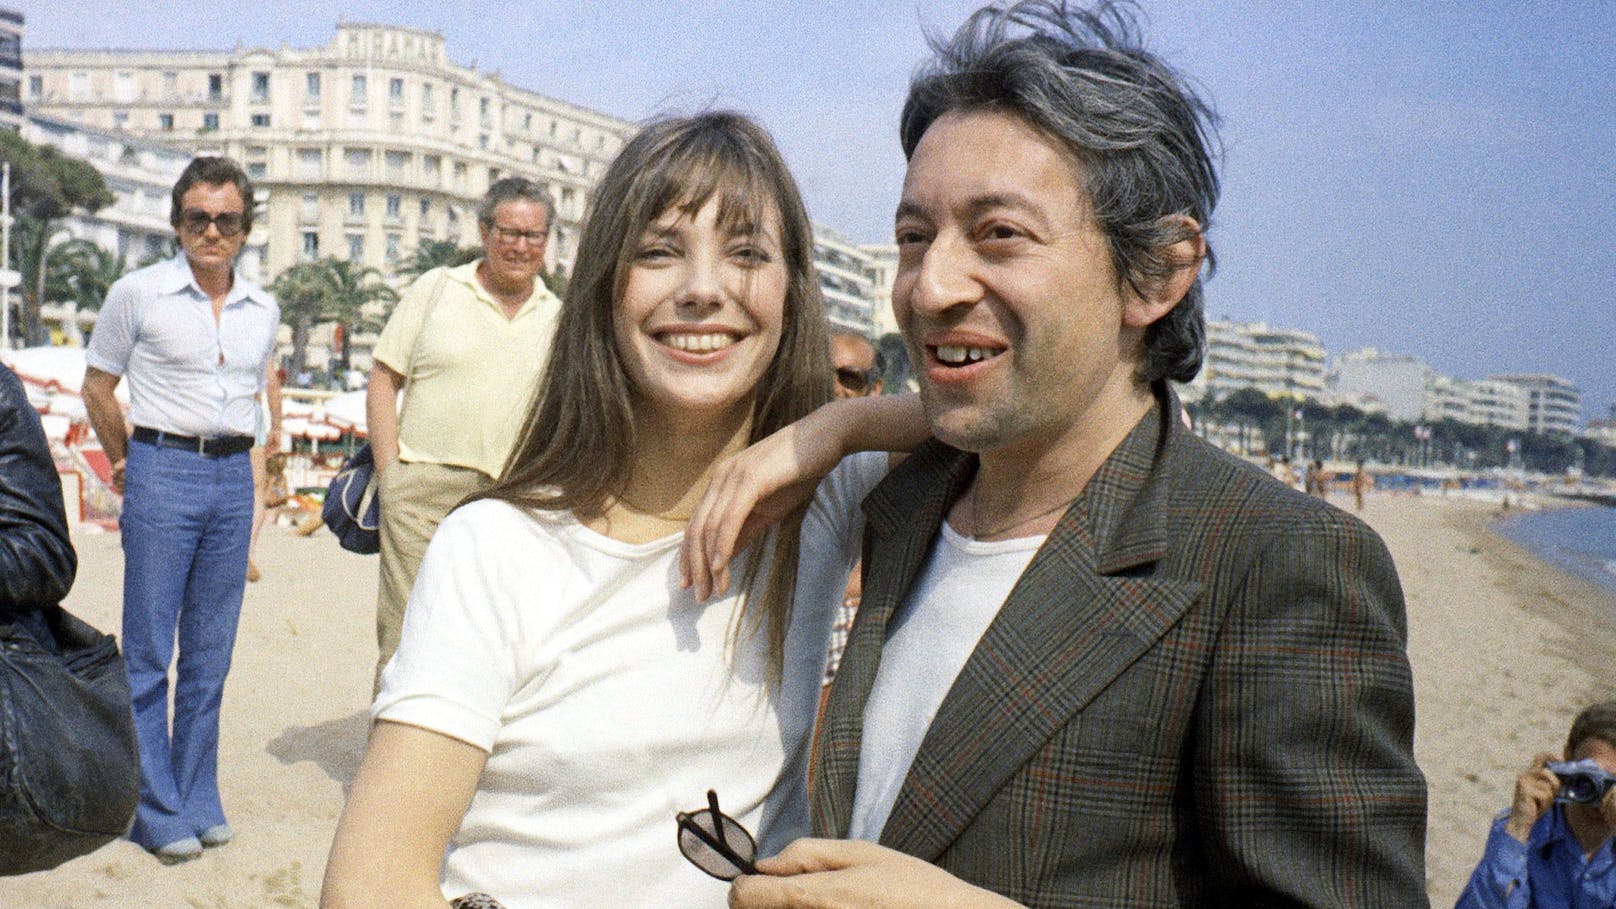 Der charmant-provokante Sänger <strong>Serge Gainsbourg</strong> und Schauspielerin <strong>Jane Birkin</strong> in Cannes, 1974